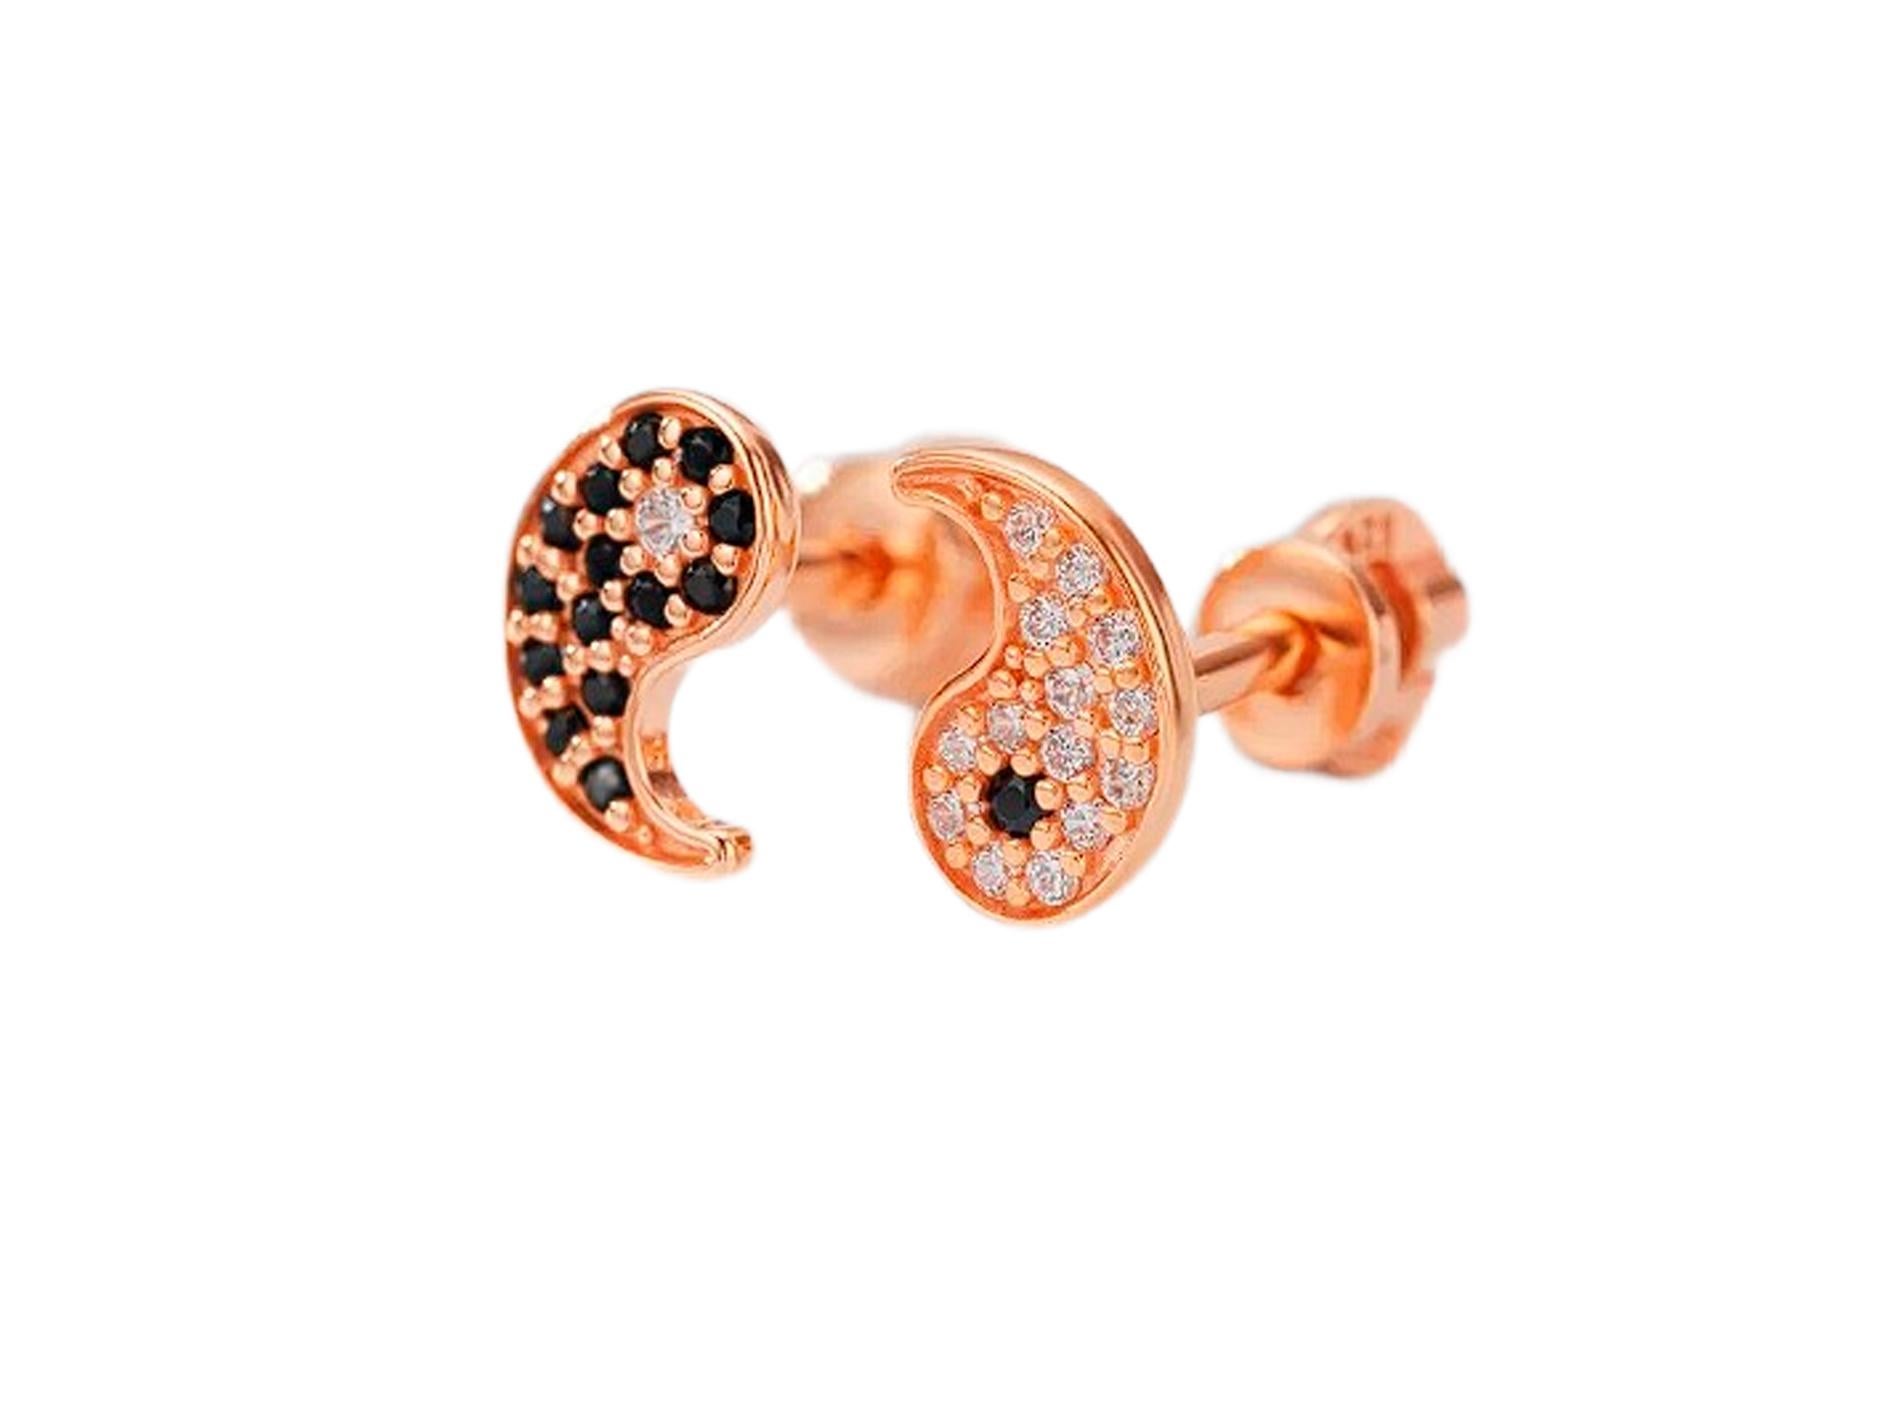 Asymmetric Yin Yang Earrings studs in 14k gold. 
Black and white earrings. Yoga Earring studs. Tiny gold earrings. Yin Yang Symbol Jewelry. Earrings Gift for Girlfriend. Beautiful earrings for everyday wearing. 

Metal: 14 karat gold
Weight: 1.9